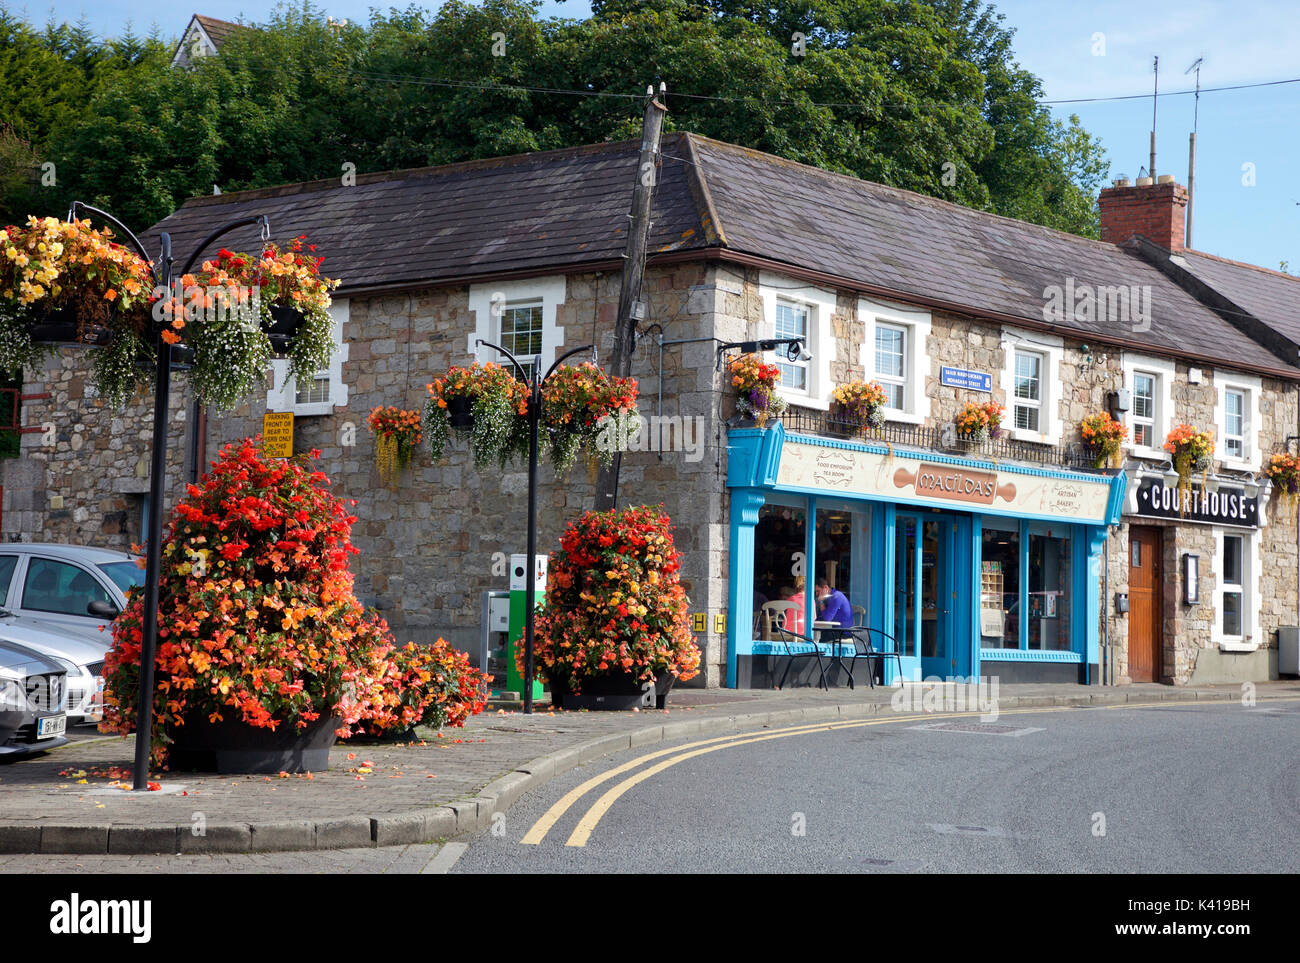 Matilda's und Courthpuse Restaurant in der Foodie Stadt Carrickmacross, Co Monaghan Stockfoto